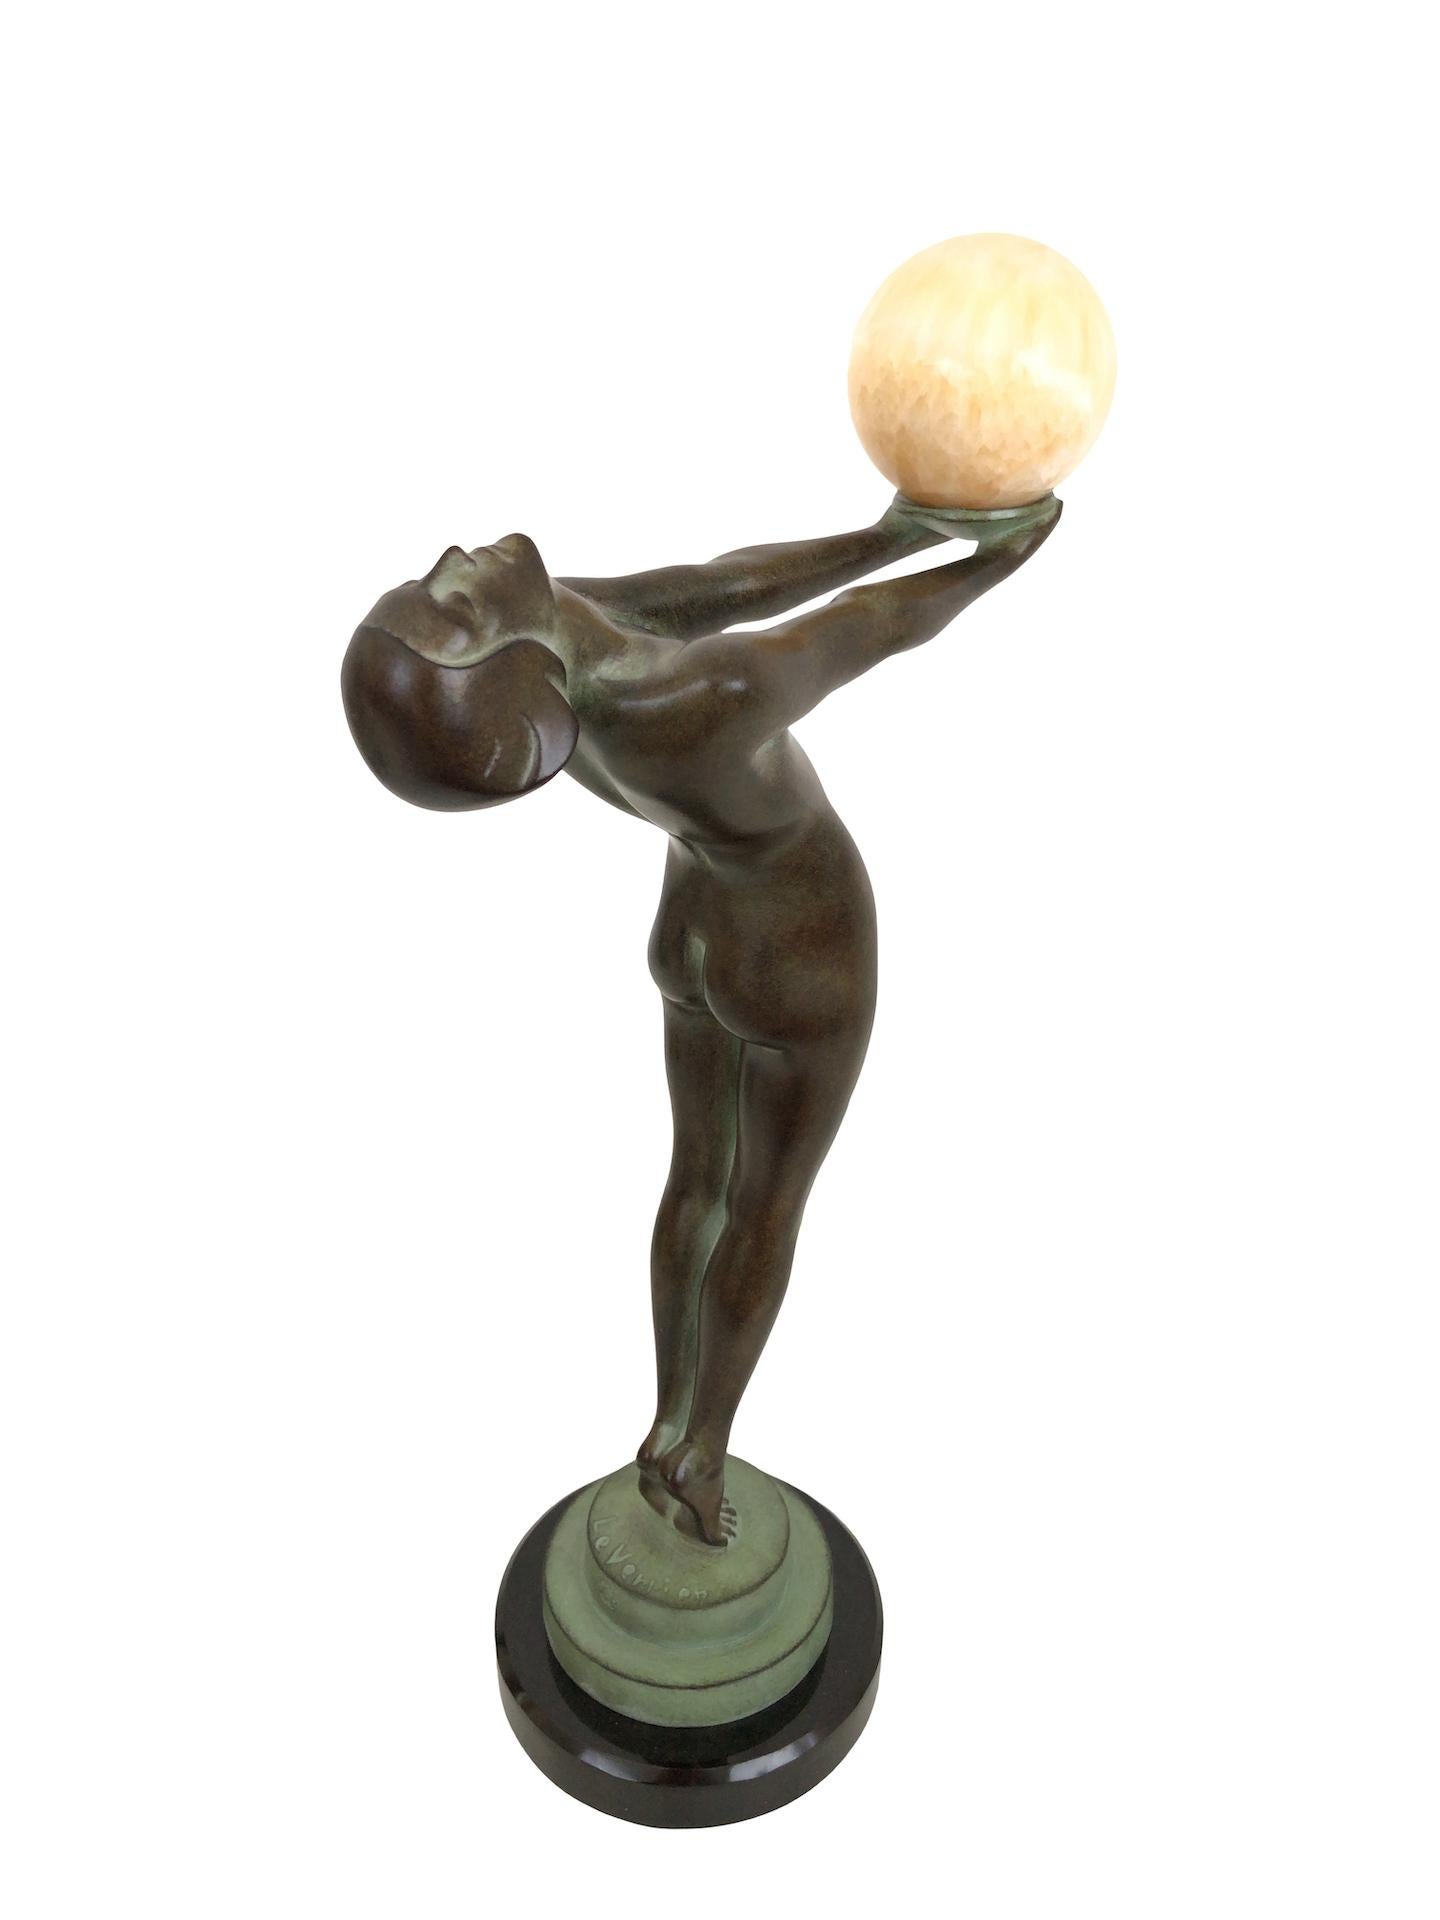 Contemporary French Art Deco Dancer Sculpture Leuer with Onyx Ball Original Max Le Verrier